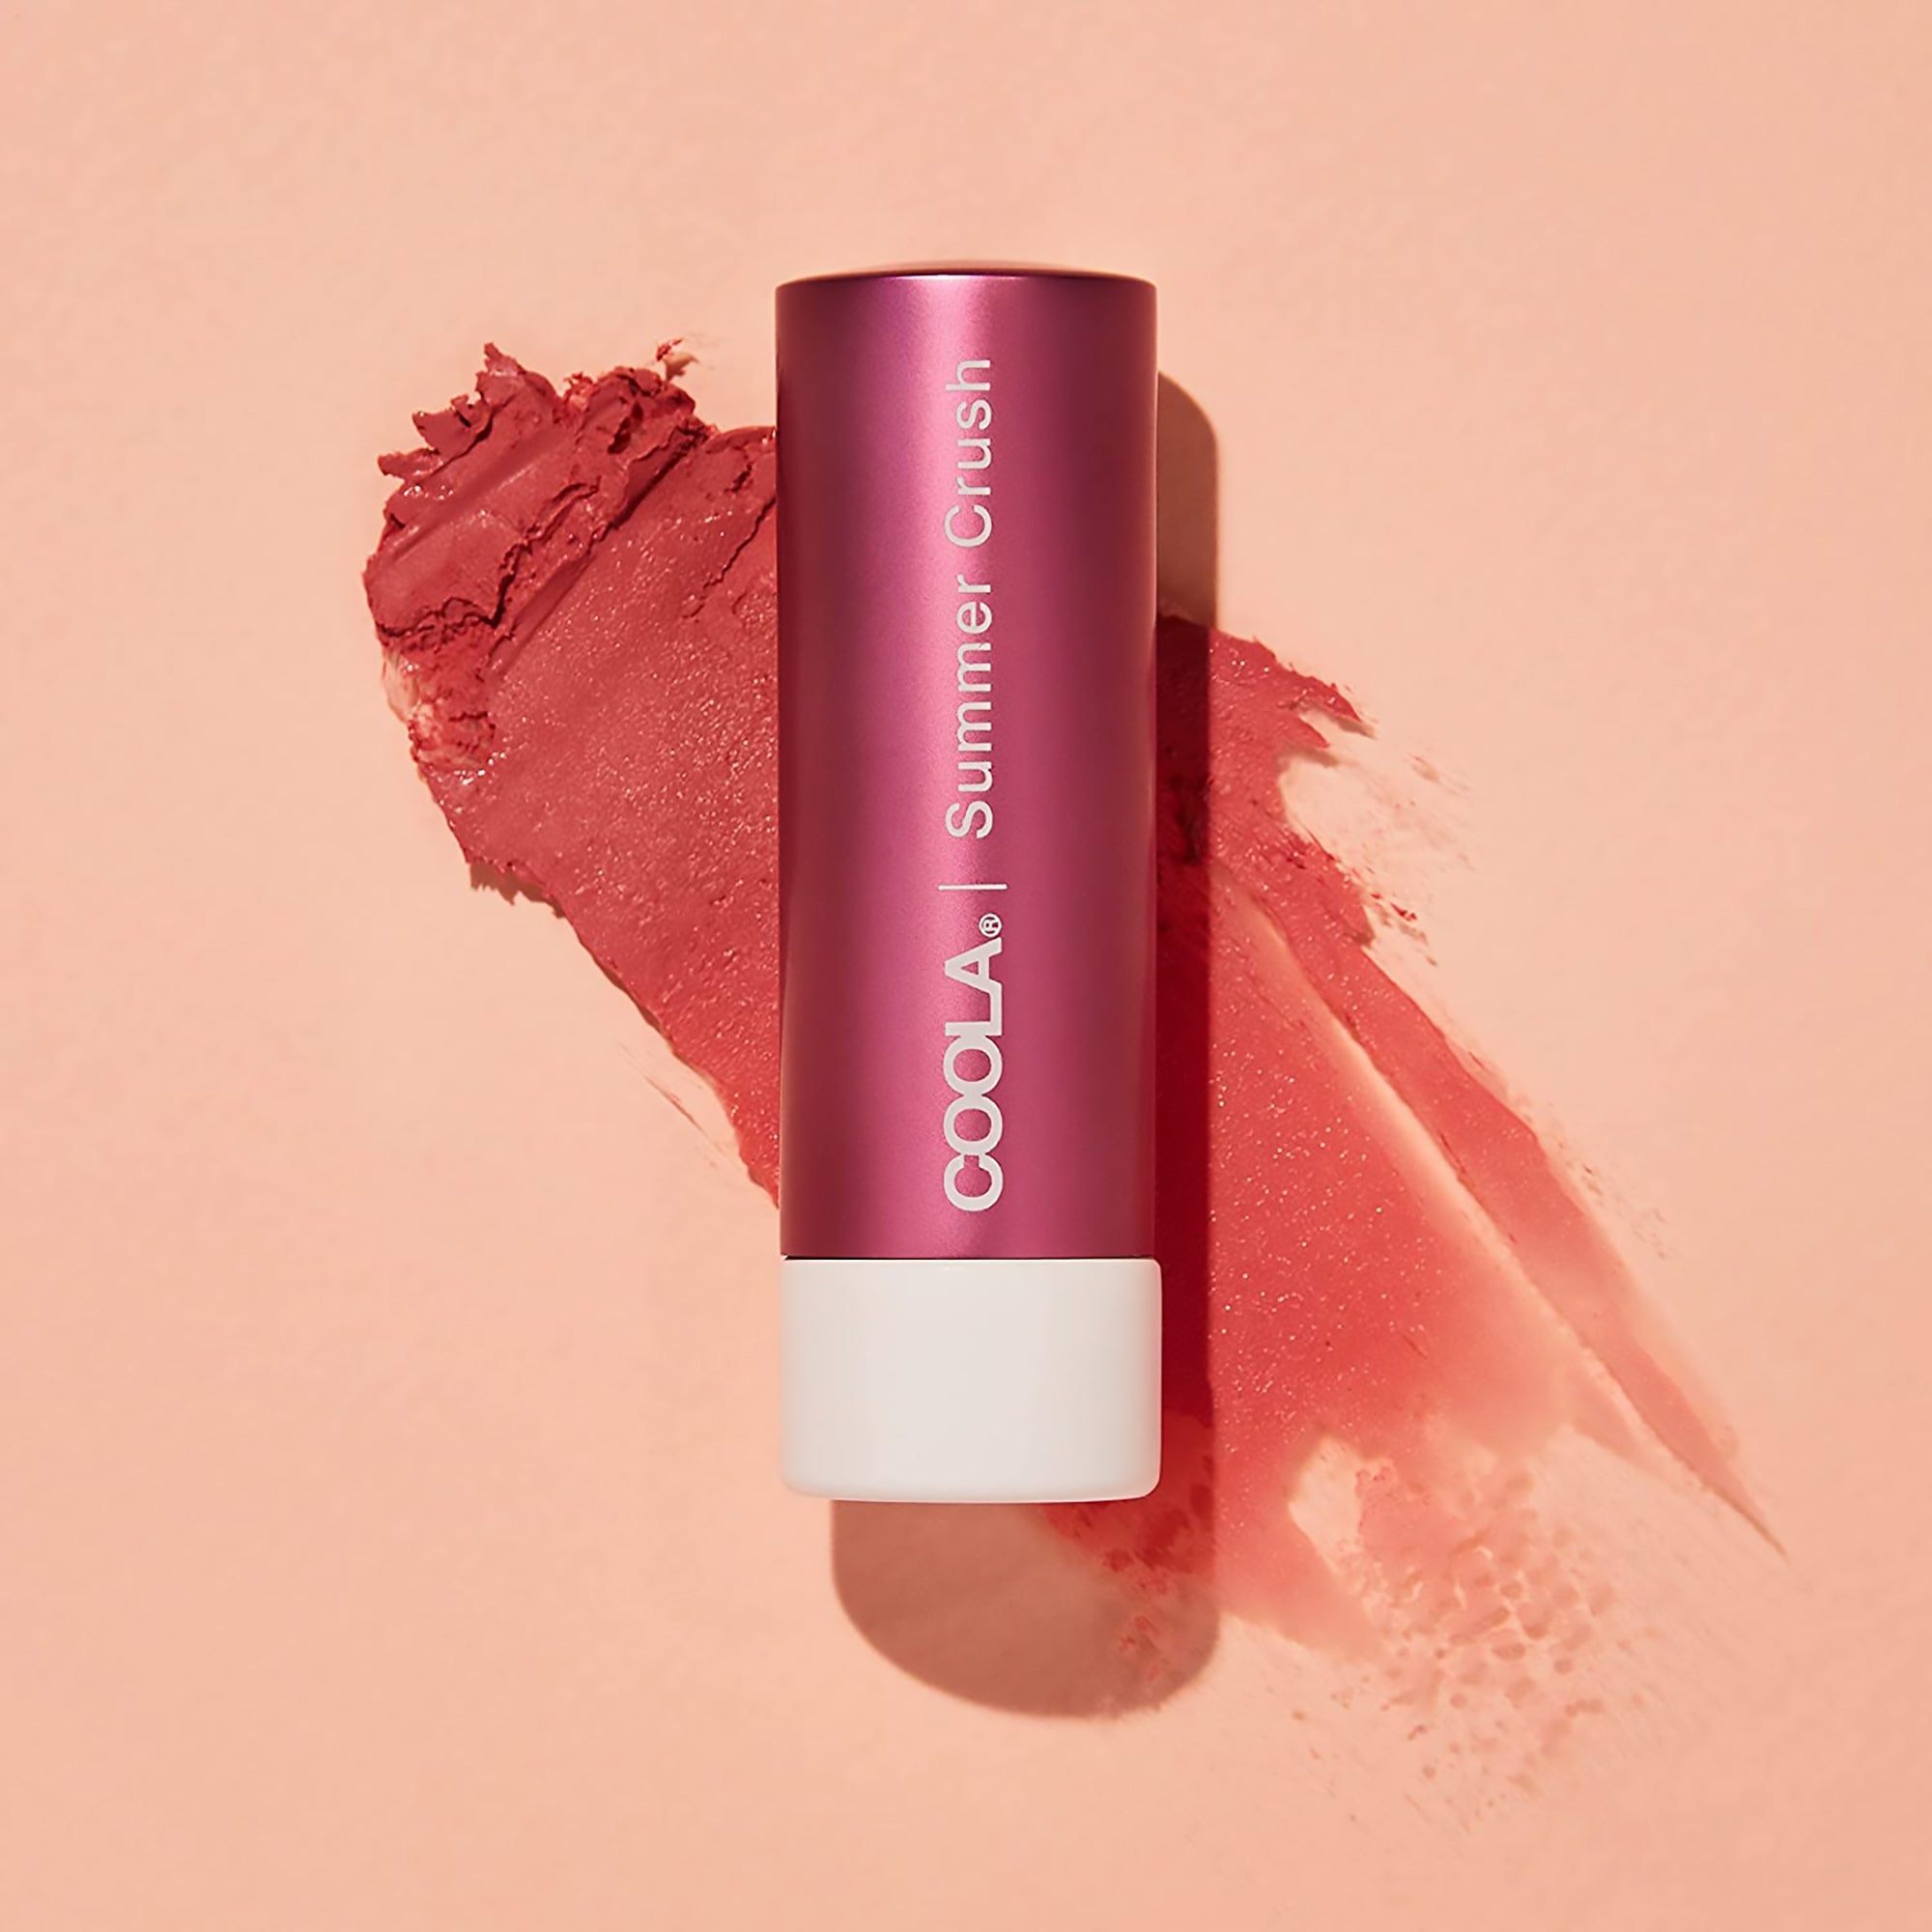 COOLA Suncare Mineral Liplux Organic Tinted Lip Balm Sunscreen SPF 30 - Summer Crush / SUMMER CRUSH